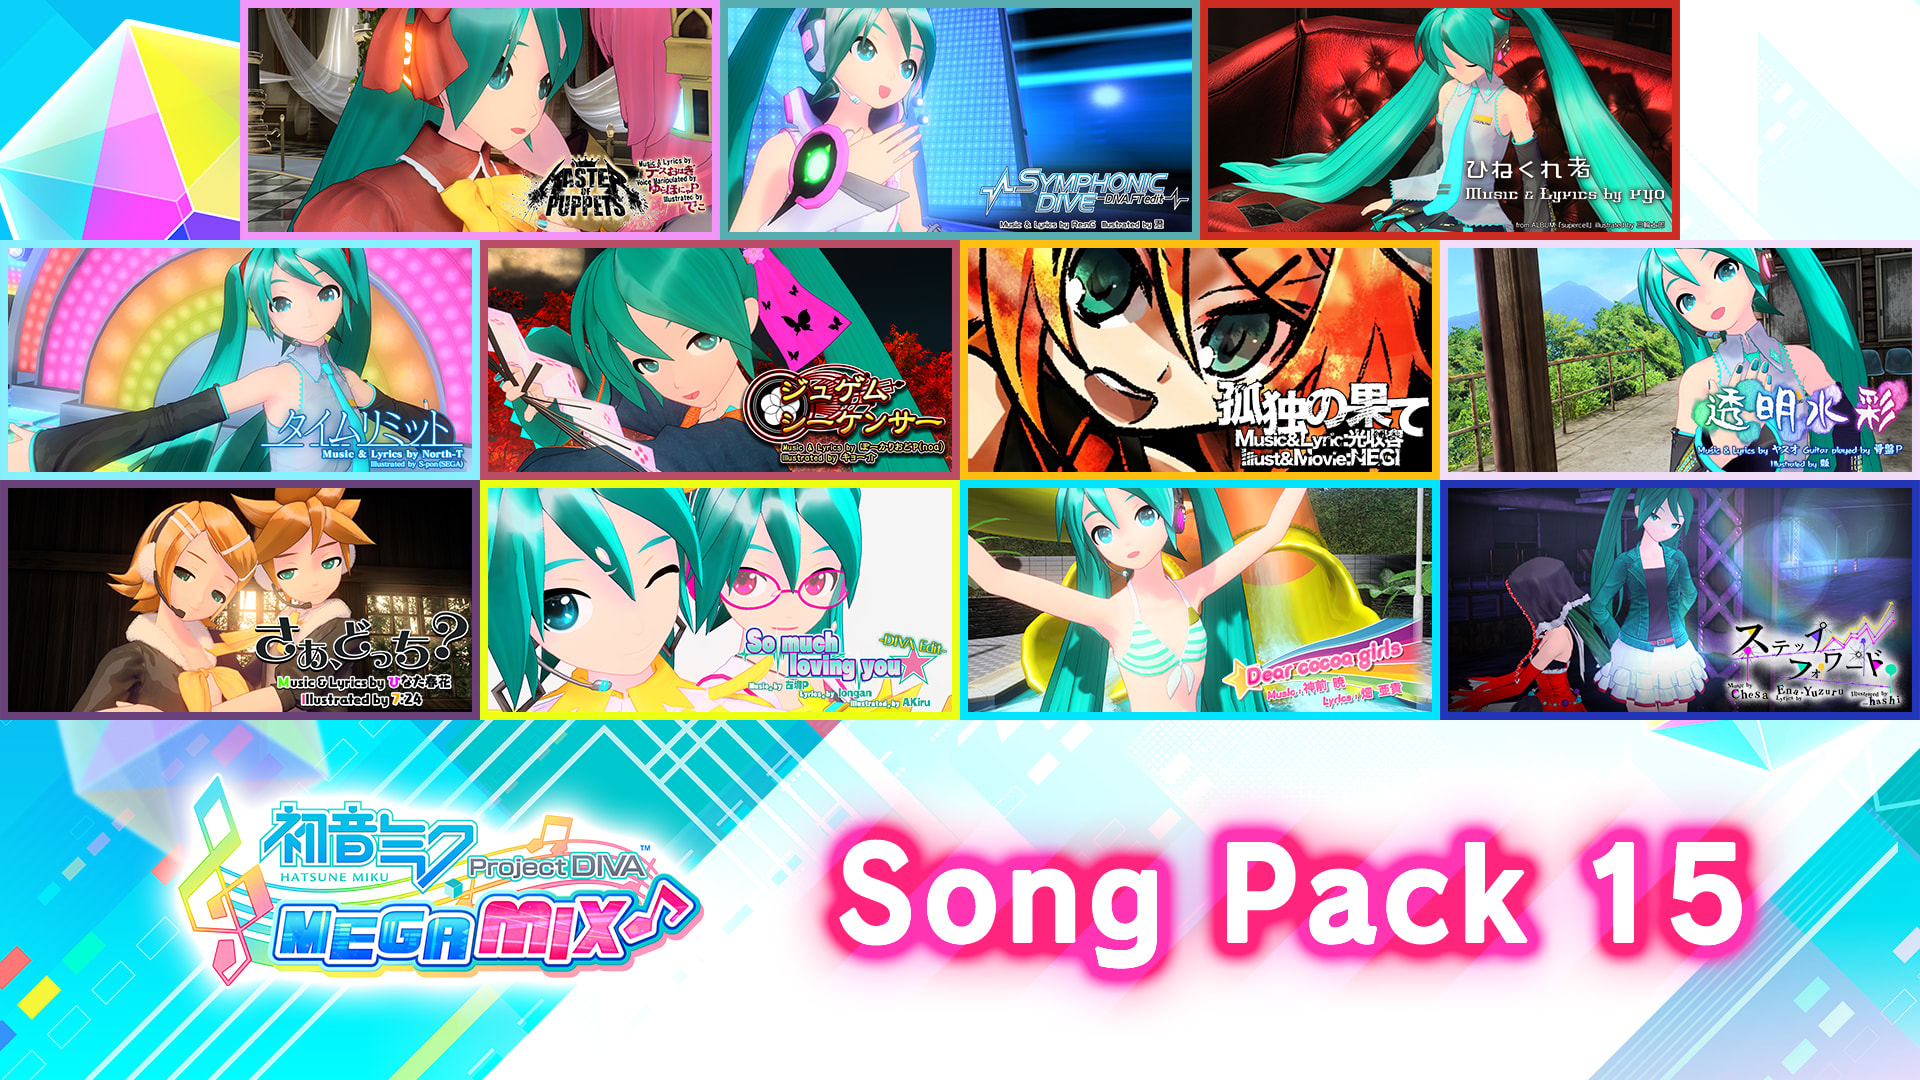 Hatsune Miku: Project DIVA Mega Mix Song Pack 15